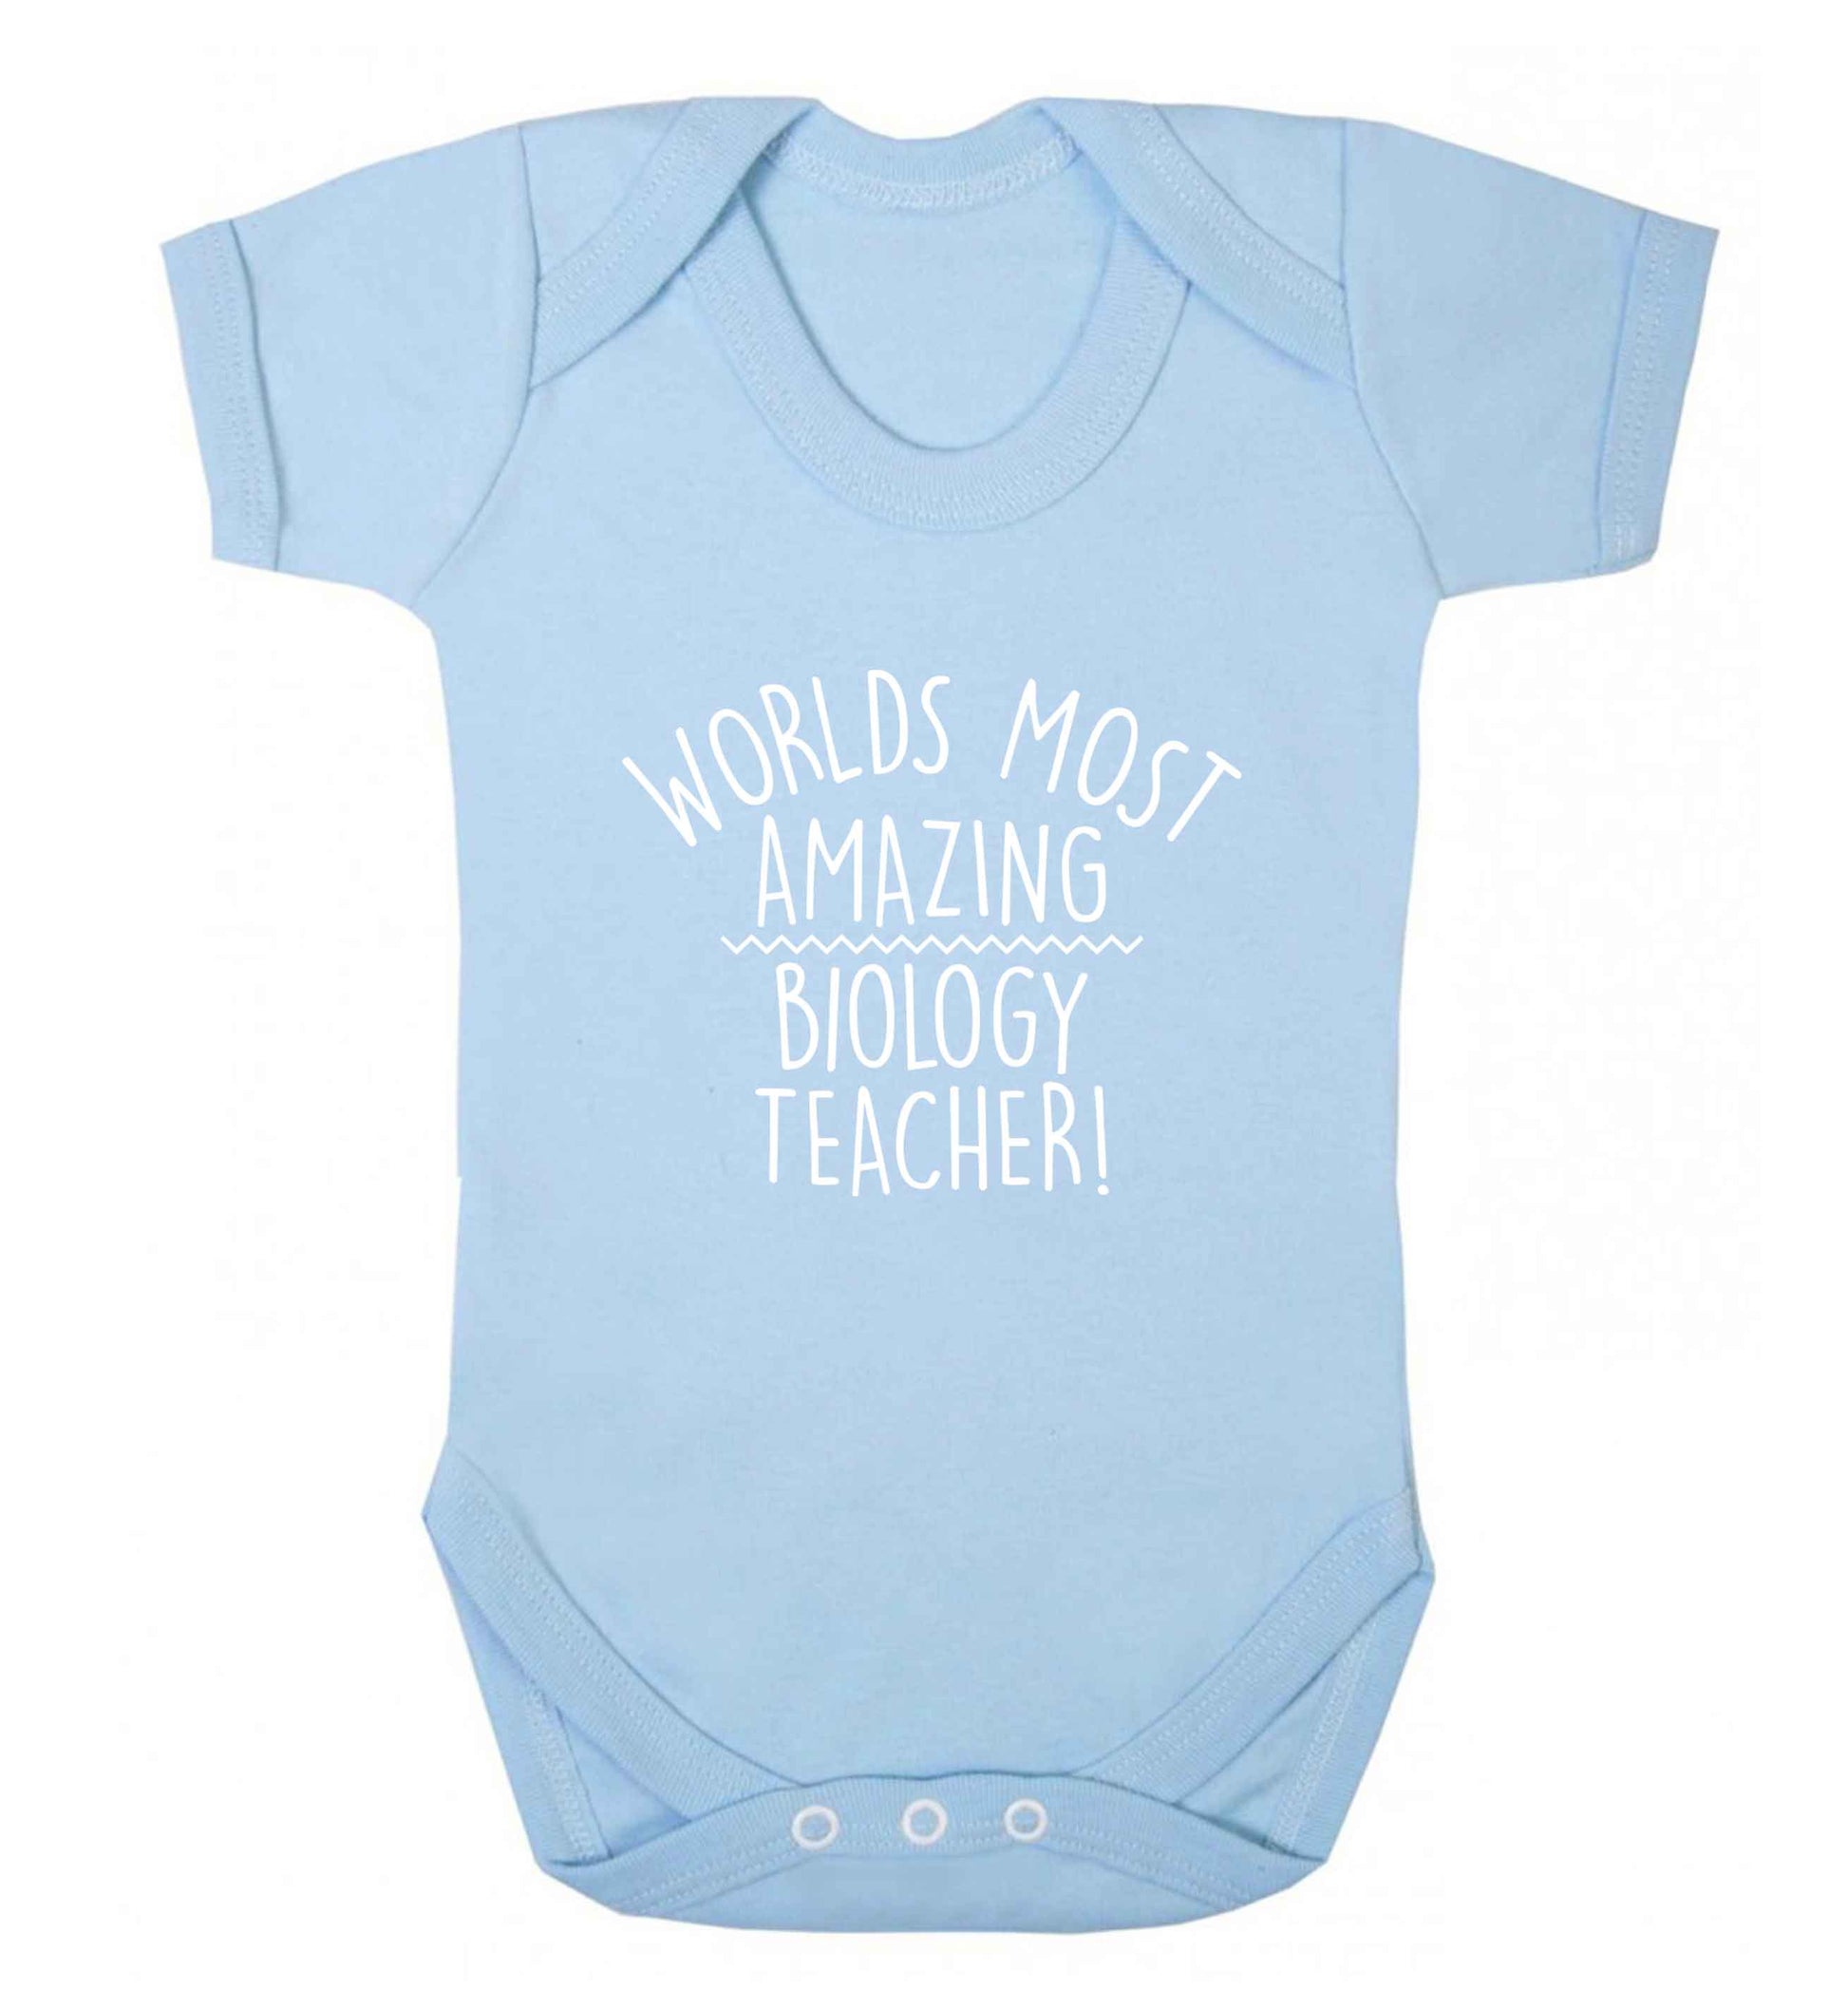 Worlds most amazing biology teacher baby vest pale blue 18-24 months